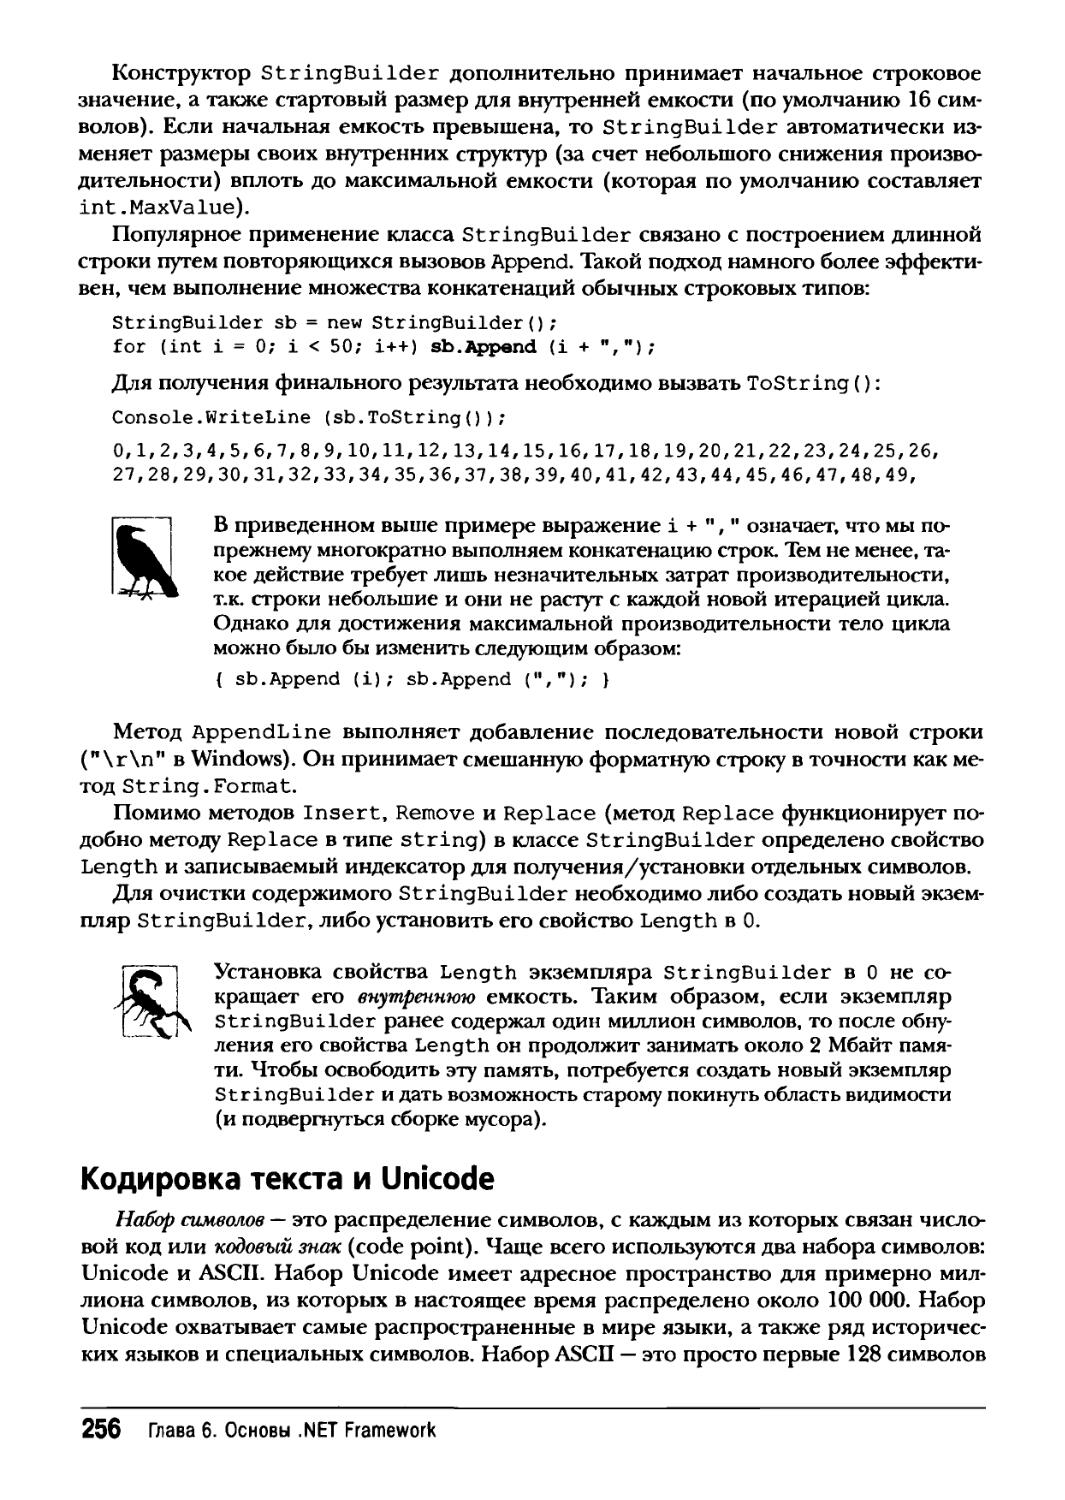 Кодировка текста и Unicode